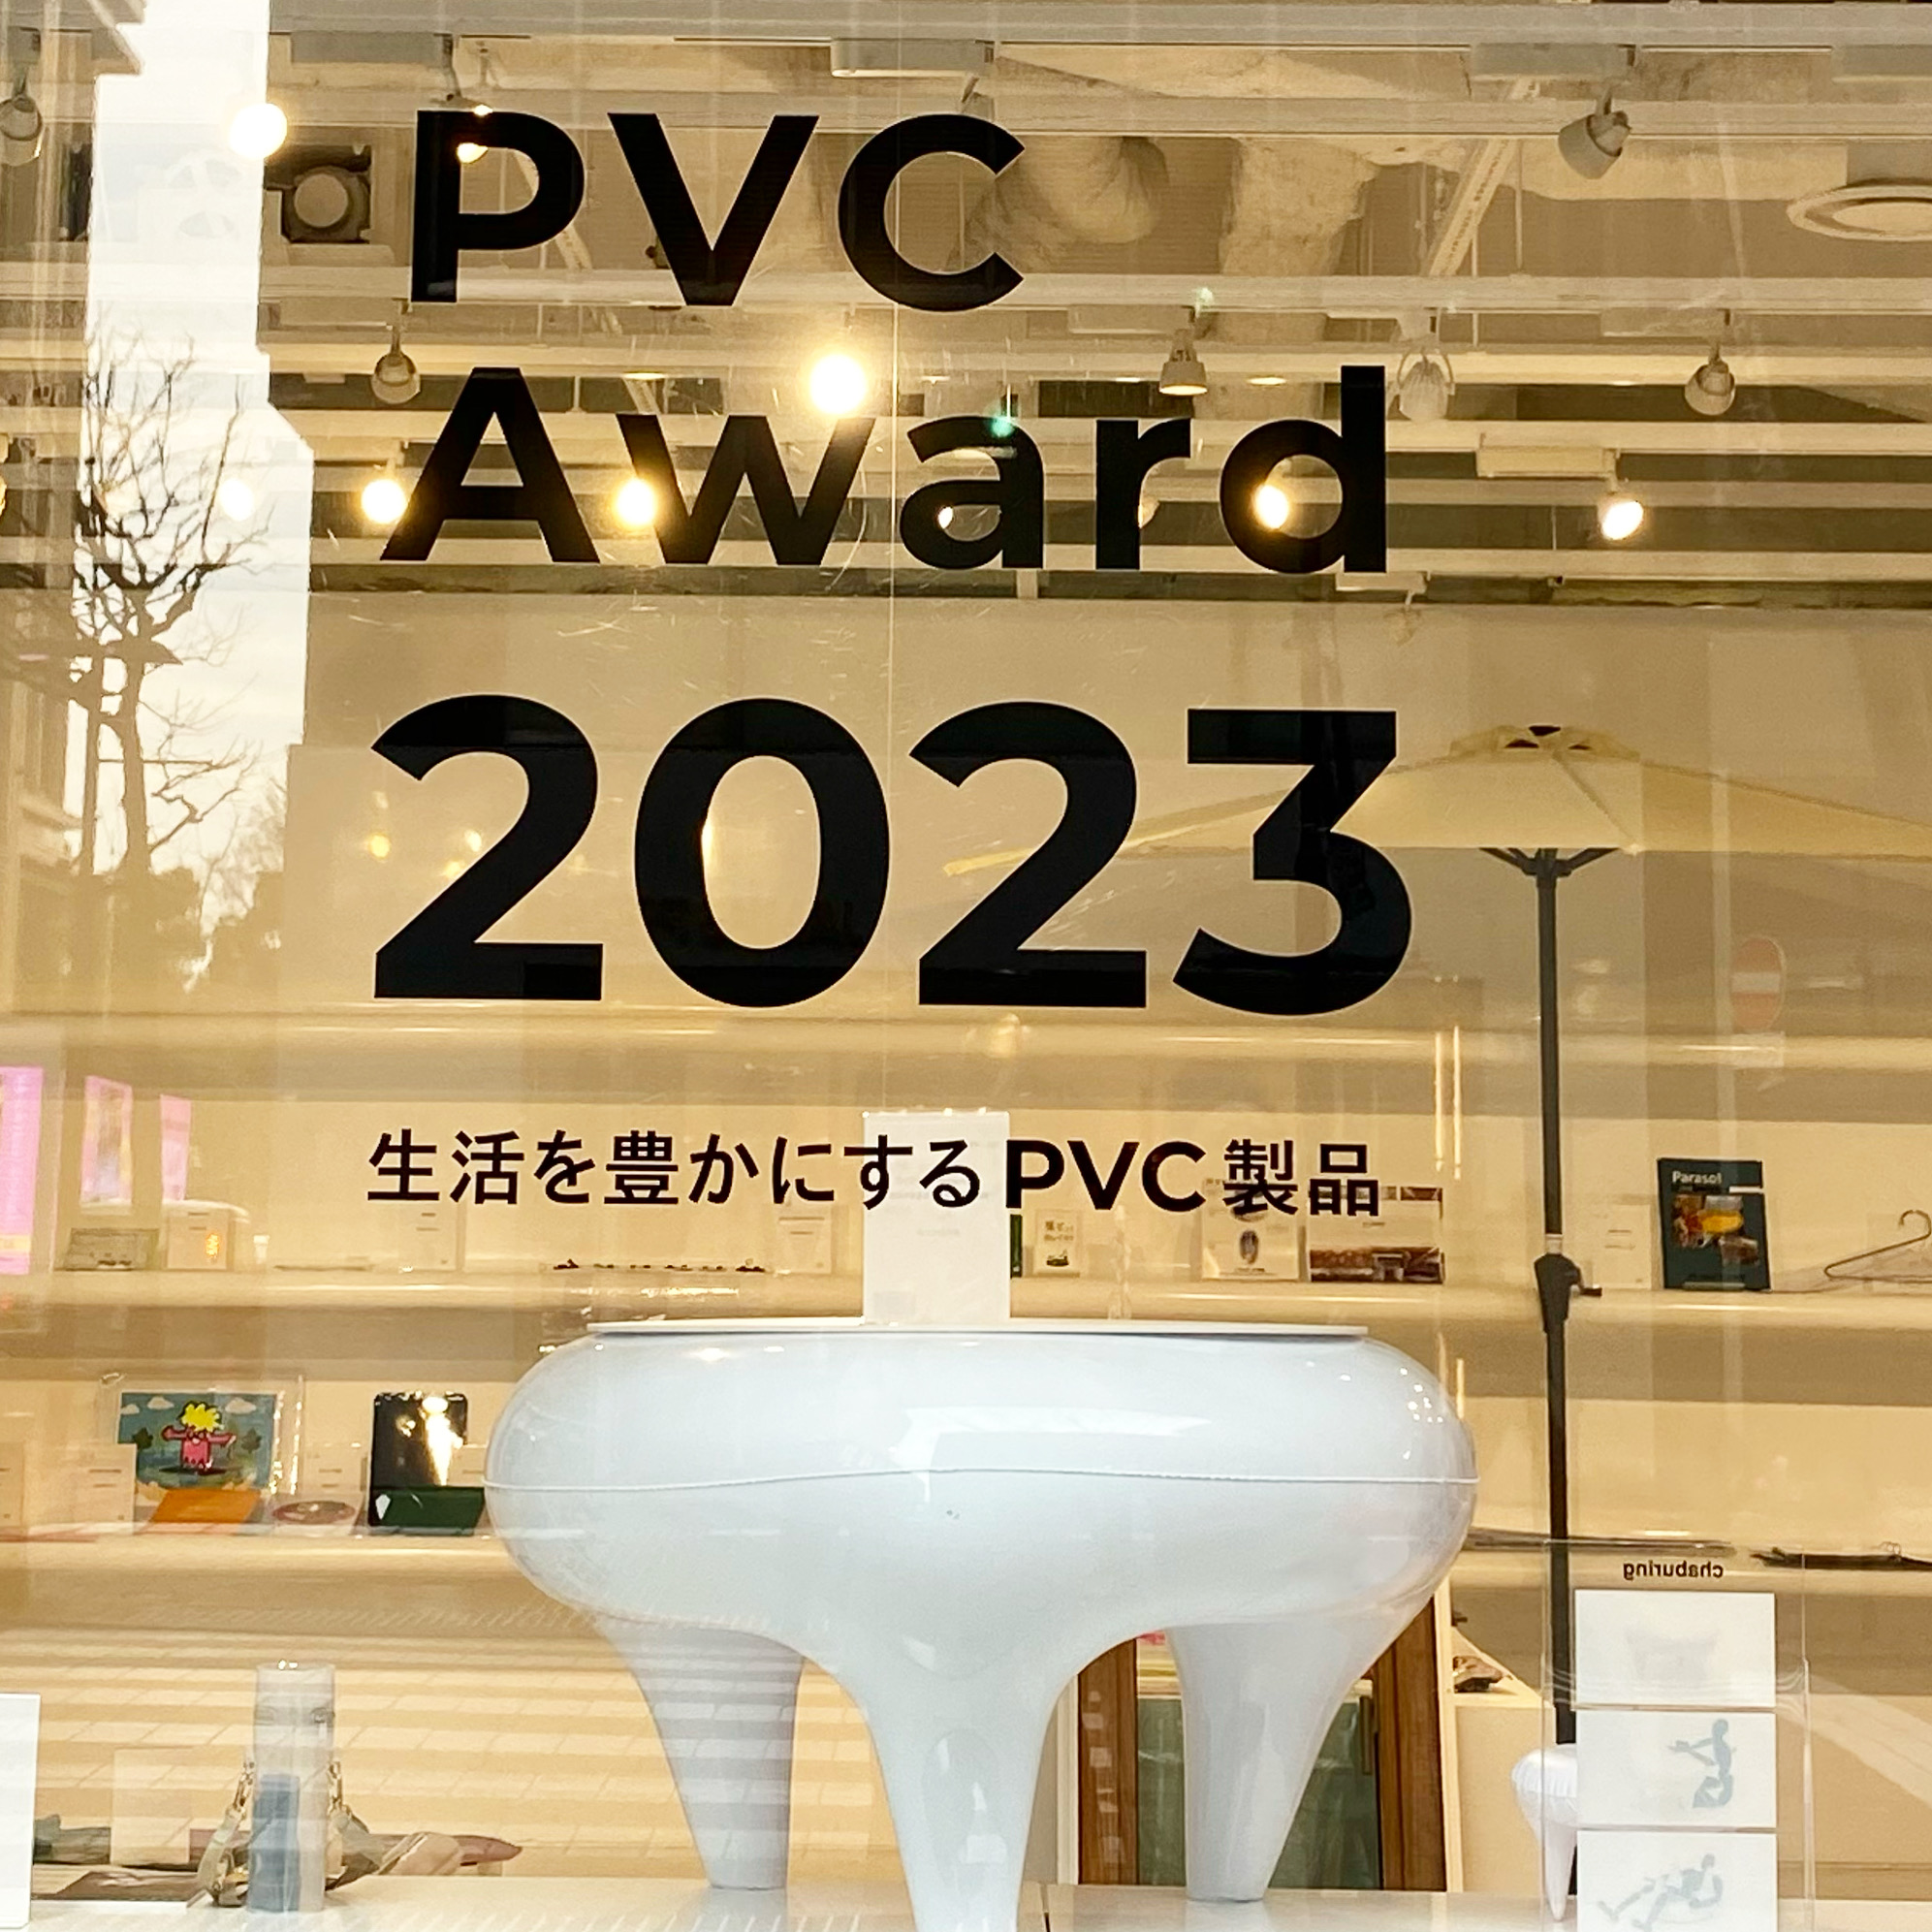 「PVC Award 2023」展示開催中のお知らせ